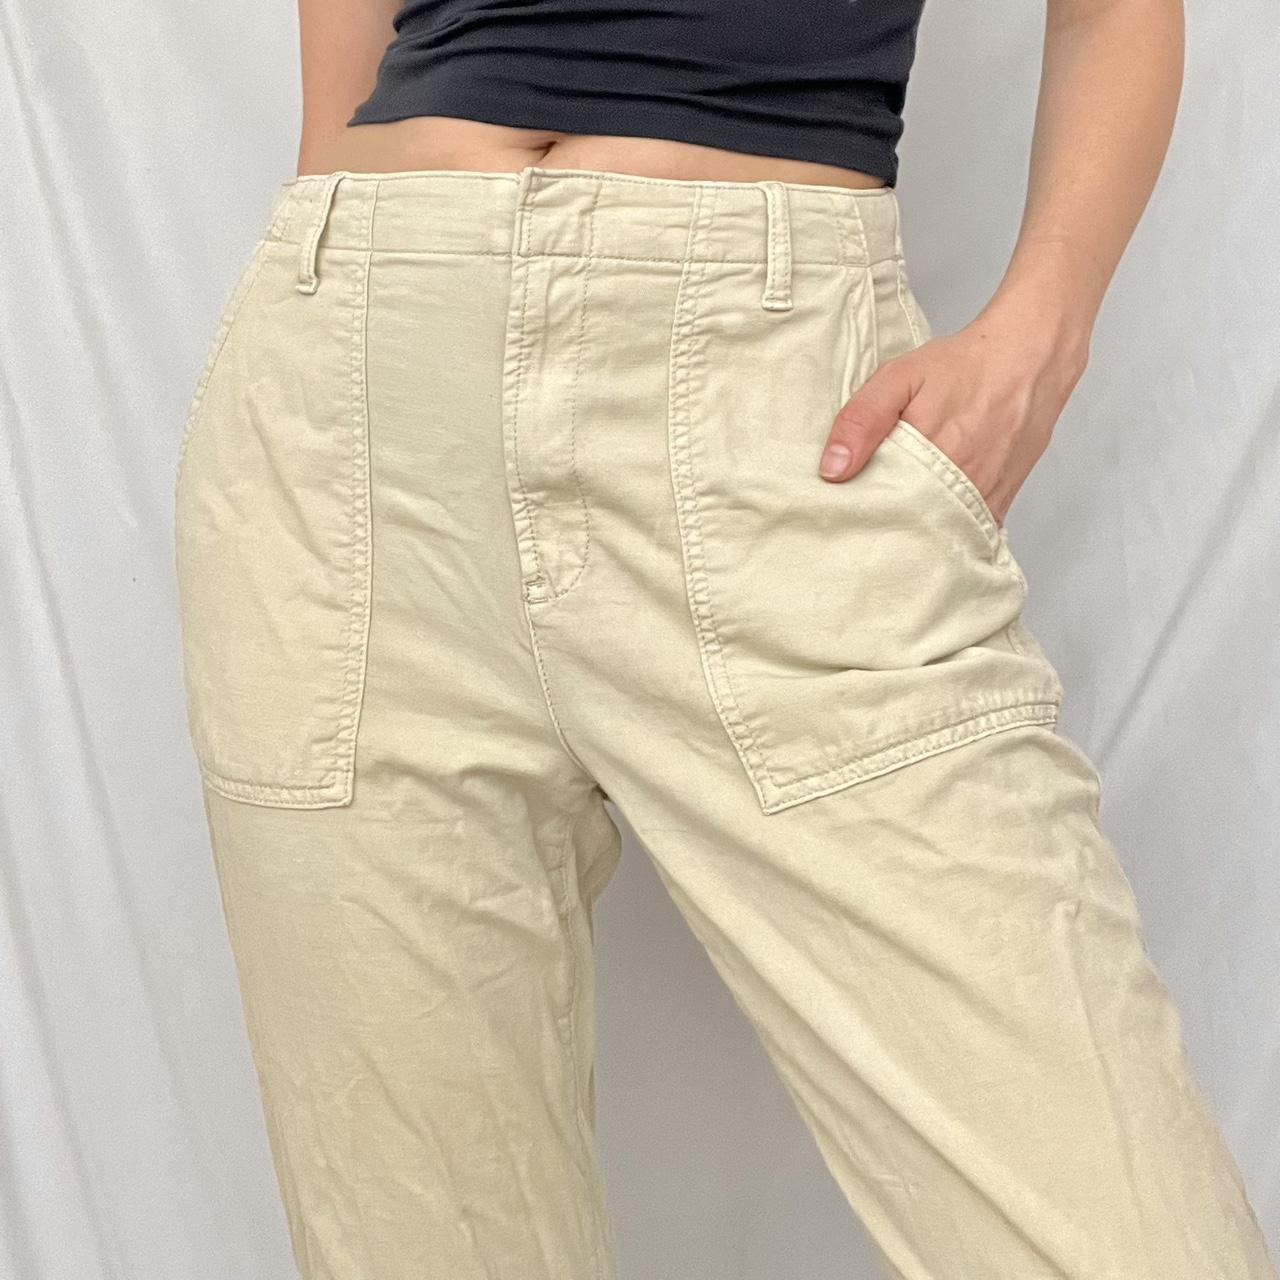 Khaki Pants For Women  Gap Canada